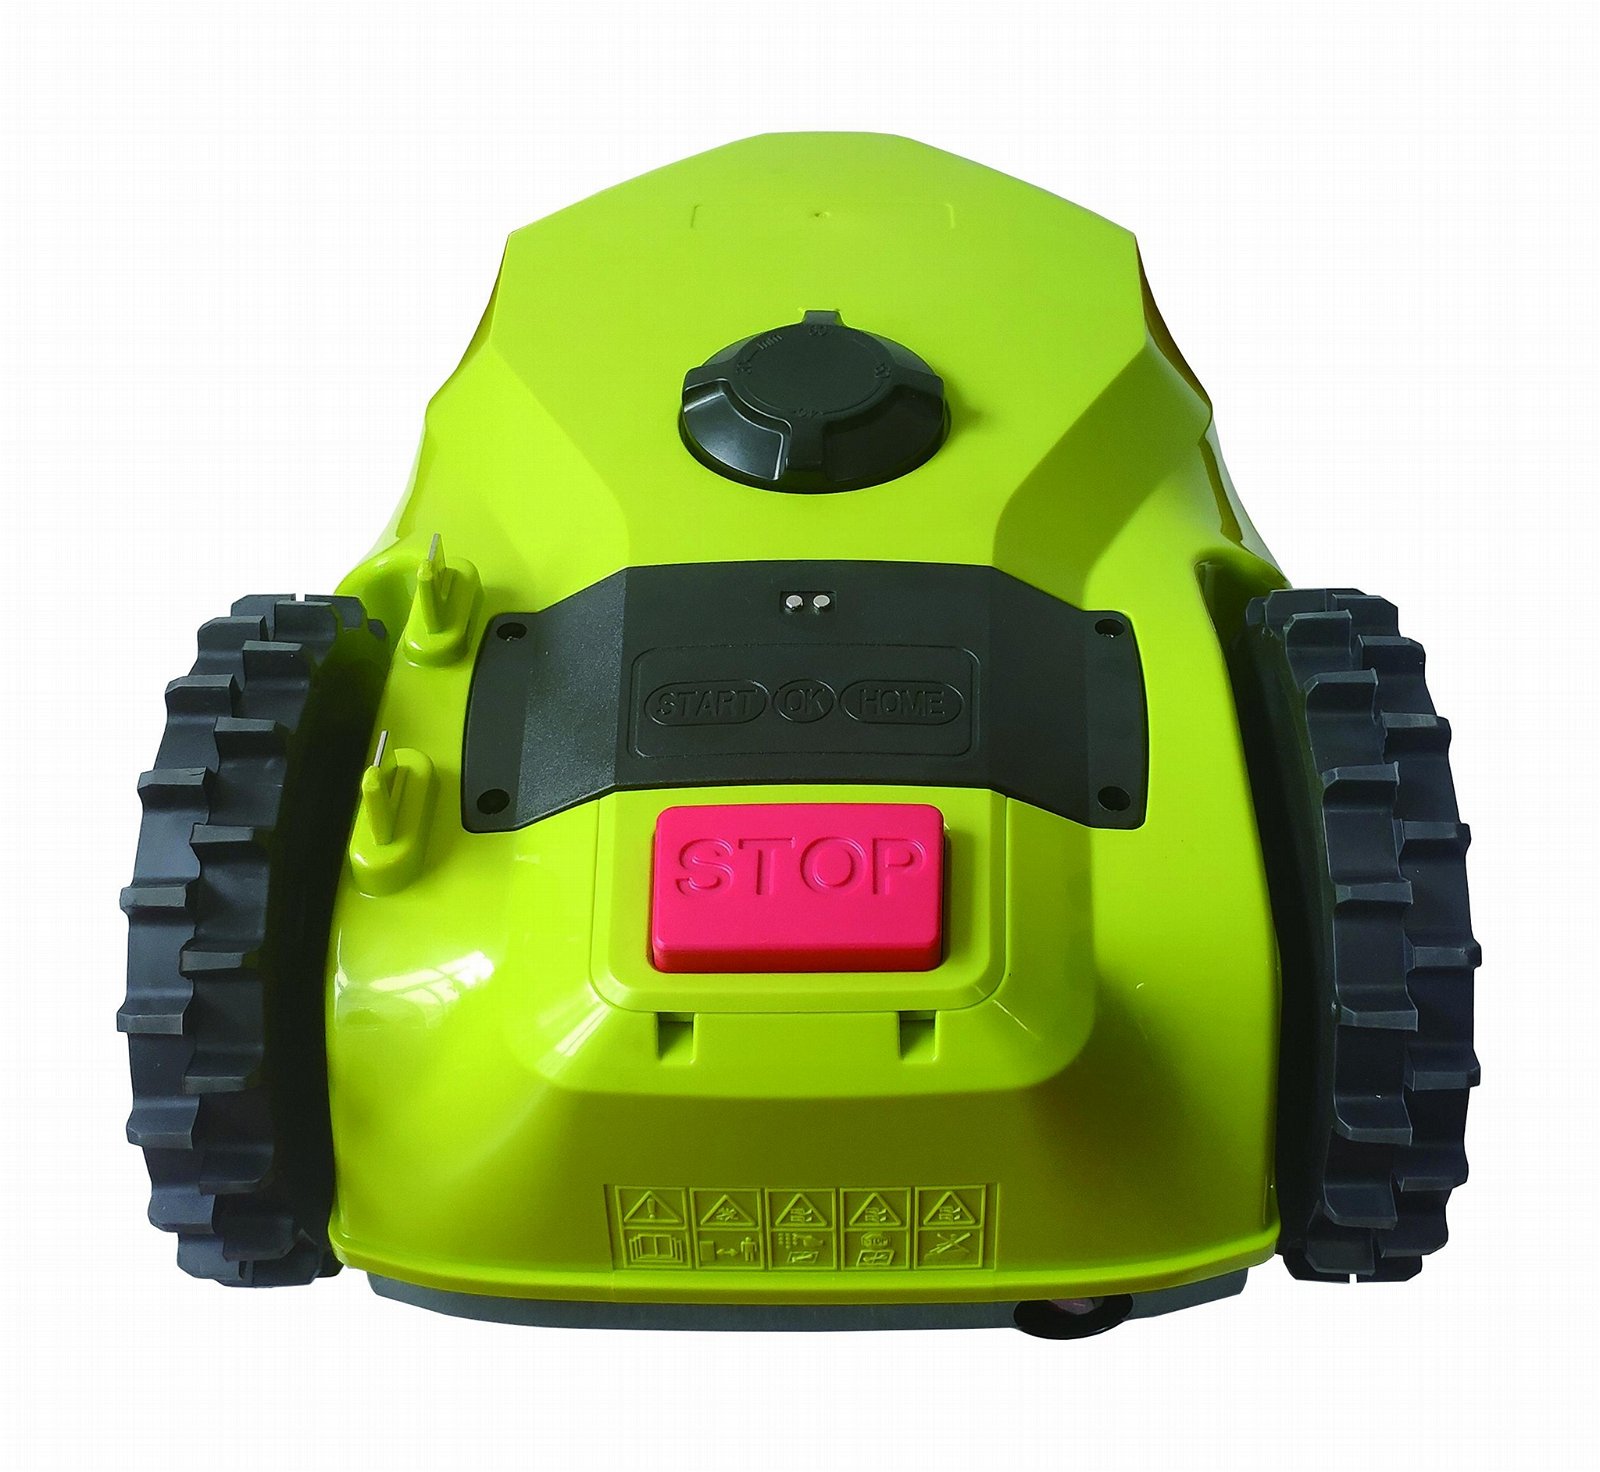 Robotic Lawn Mower 4